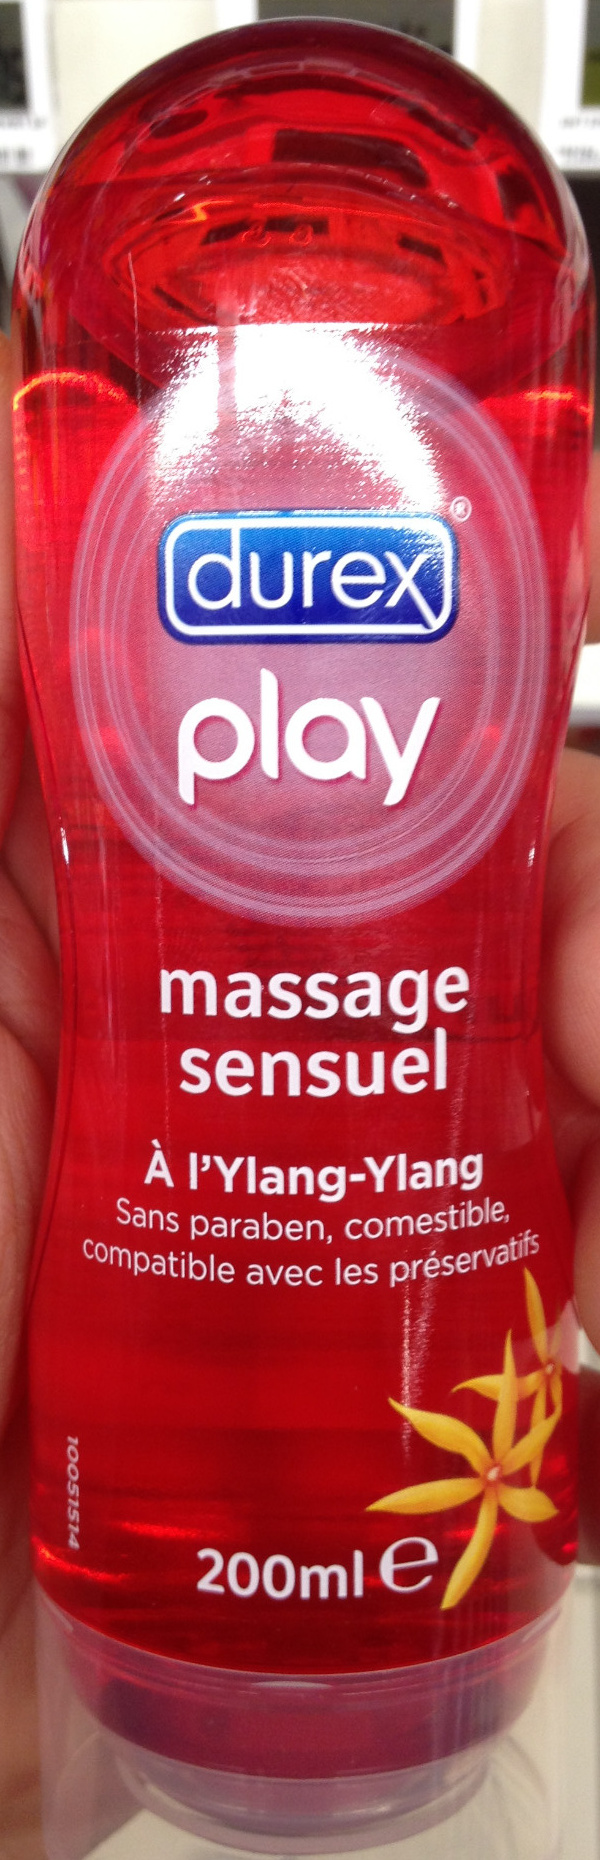 Massage sensuel à l'ylang-ylang - Product - fr